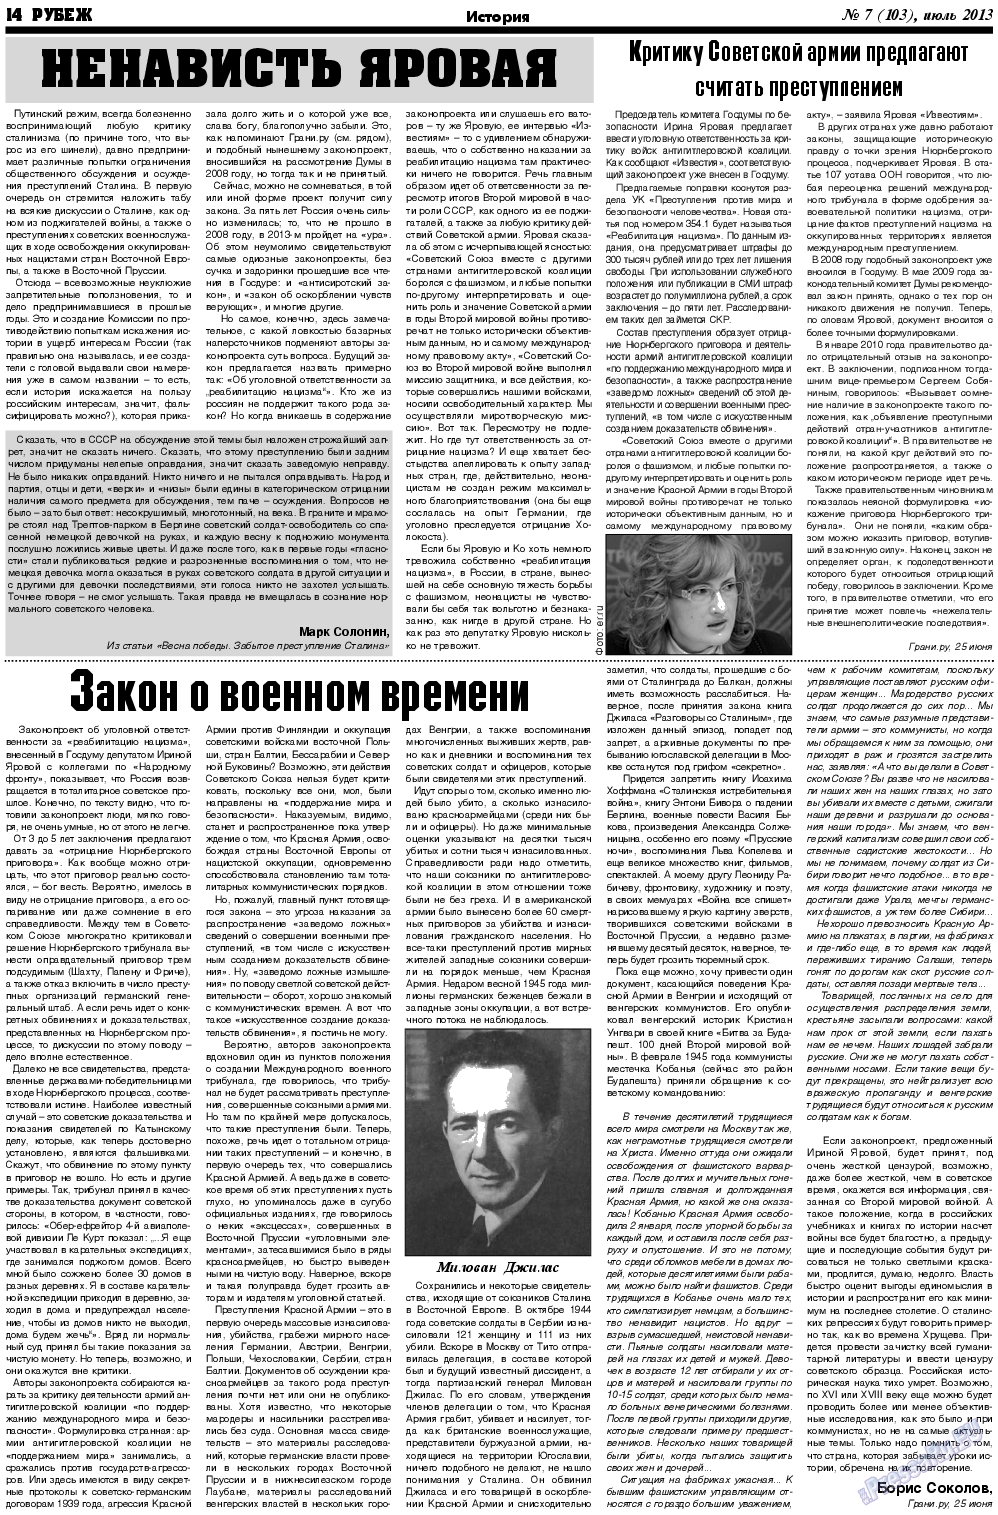 Рубеж, газета. 2013 №7 стр.14